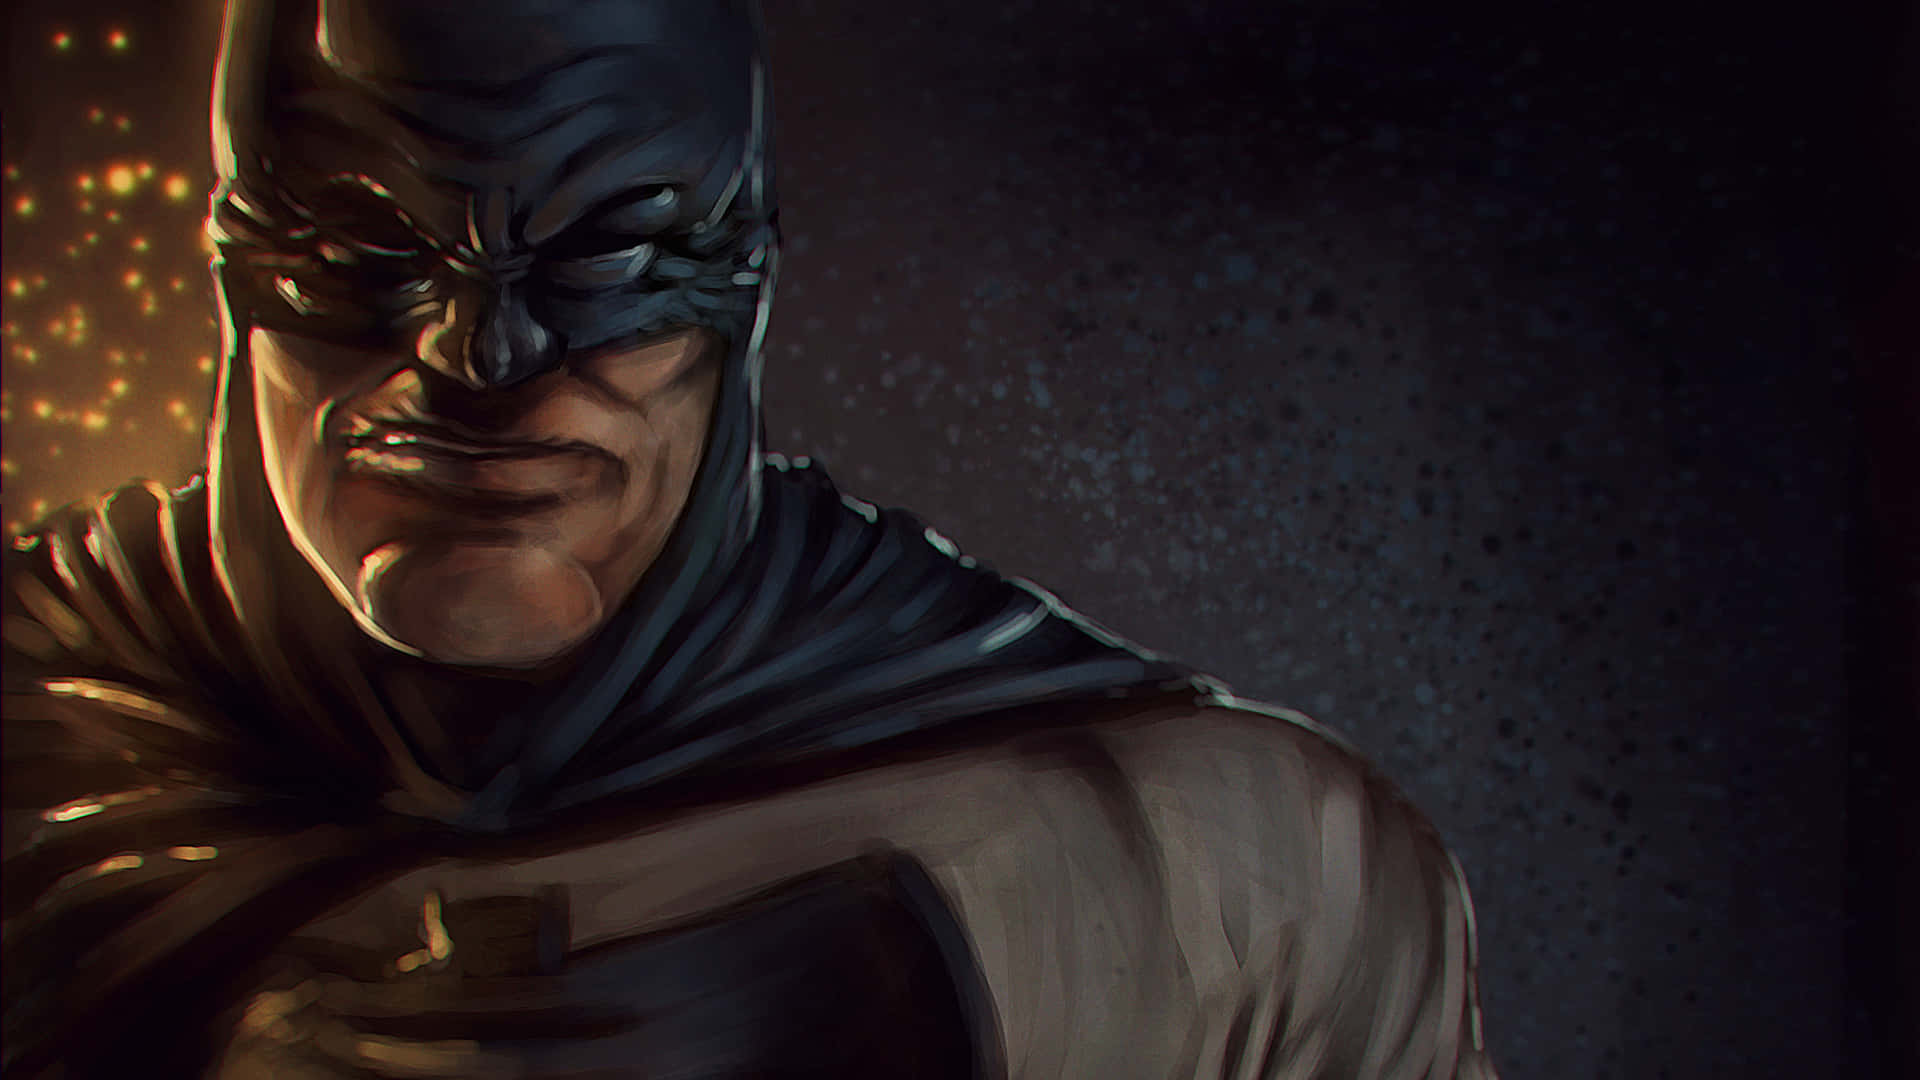 Batman - The Dark Knight Returns in a Stunning Night Scene Wallpaper